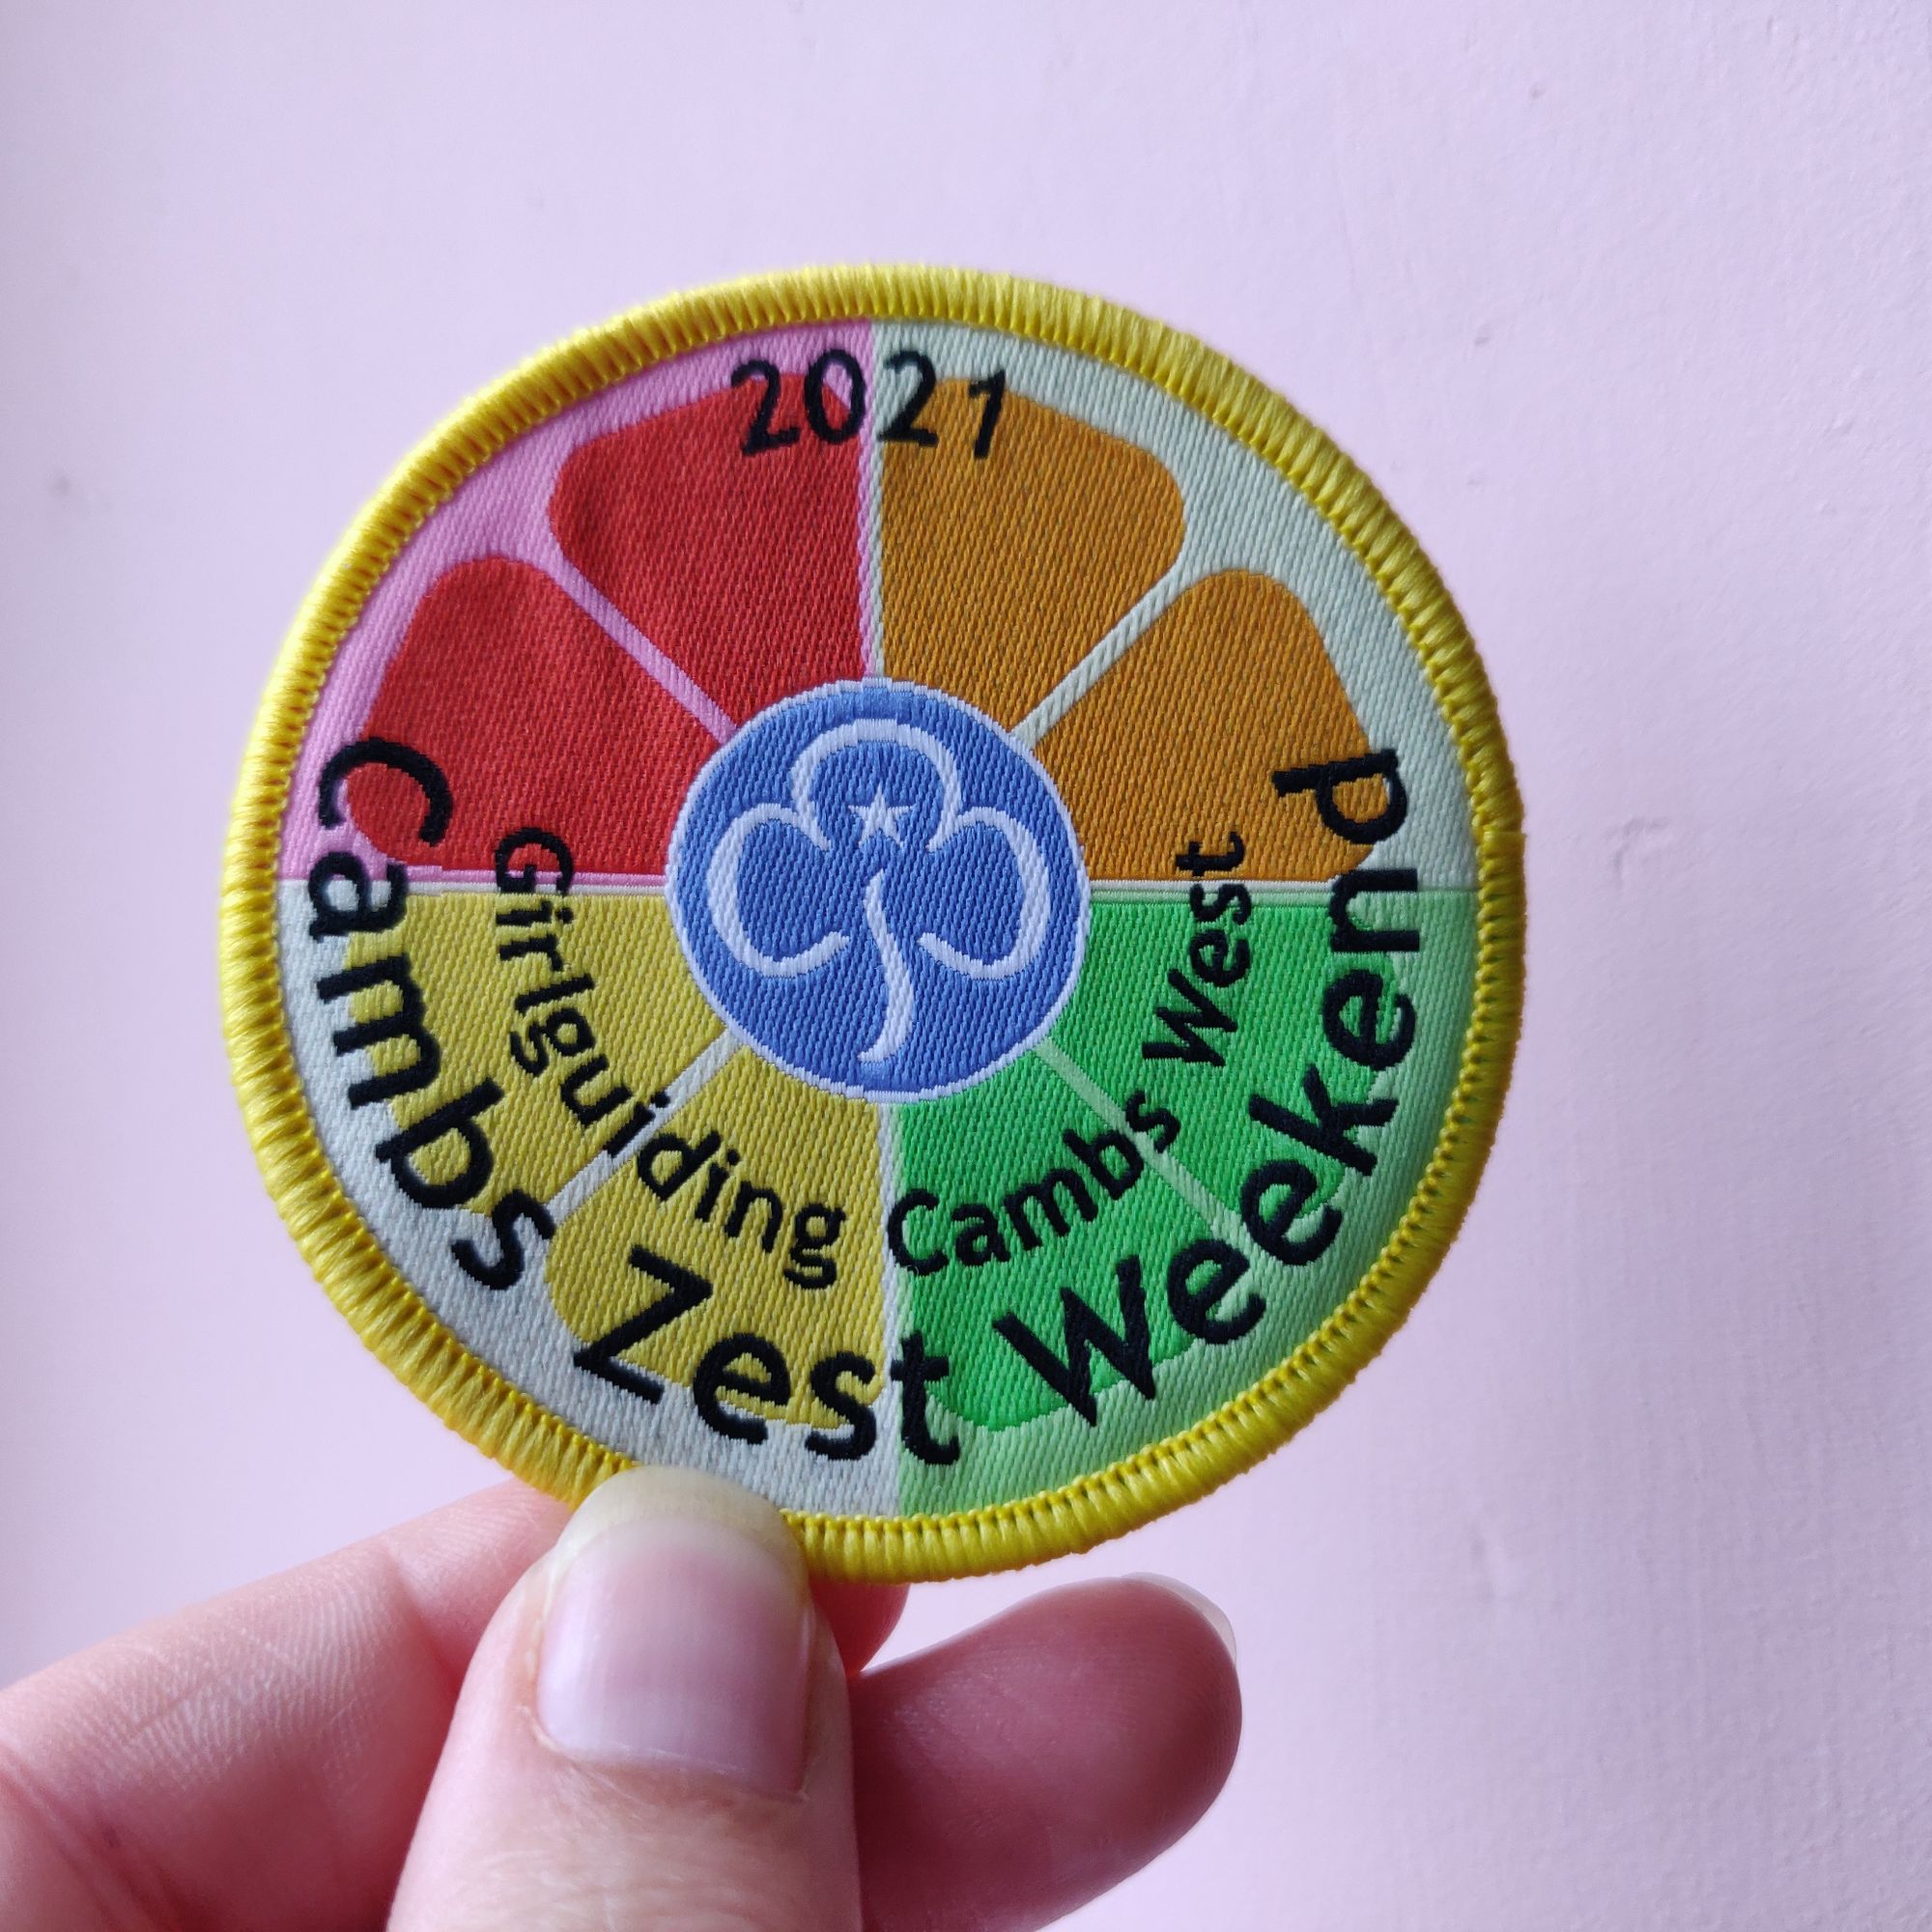 Panto challenge badge